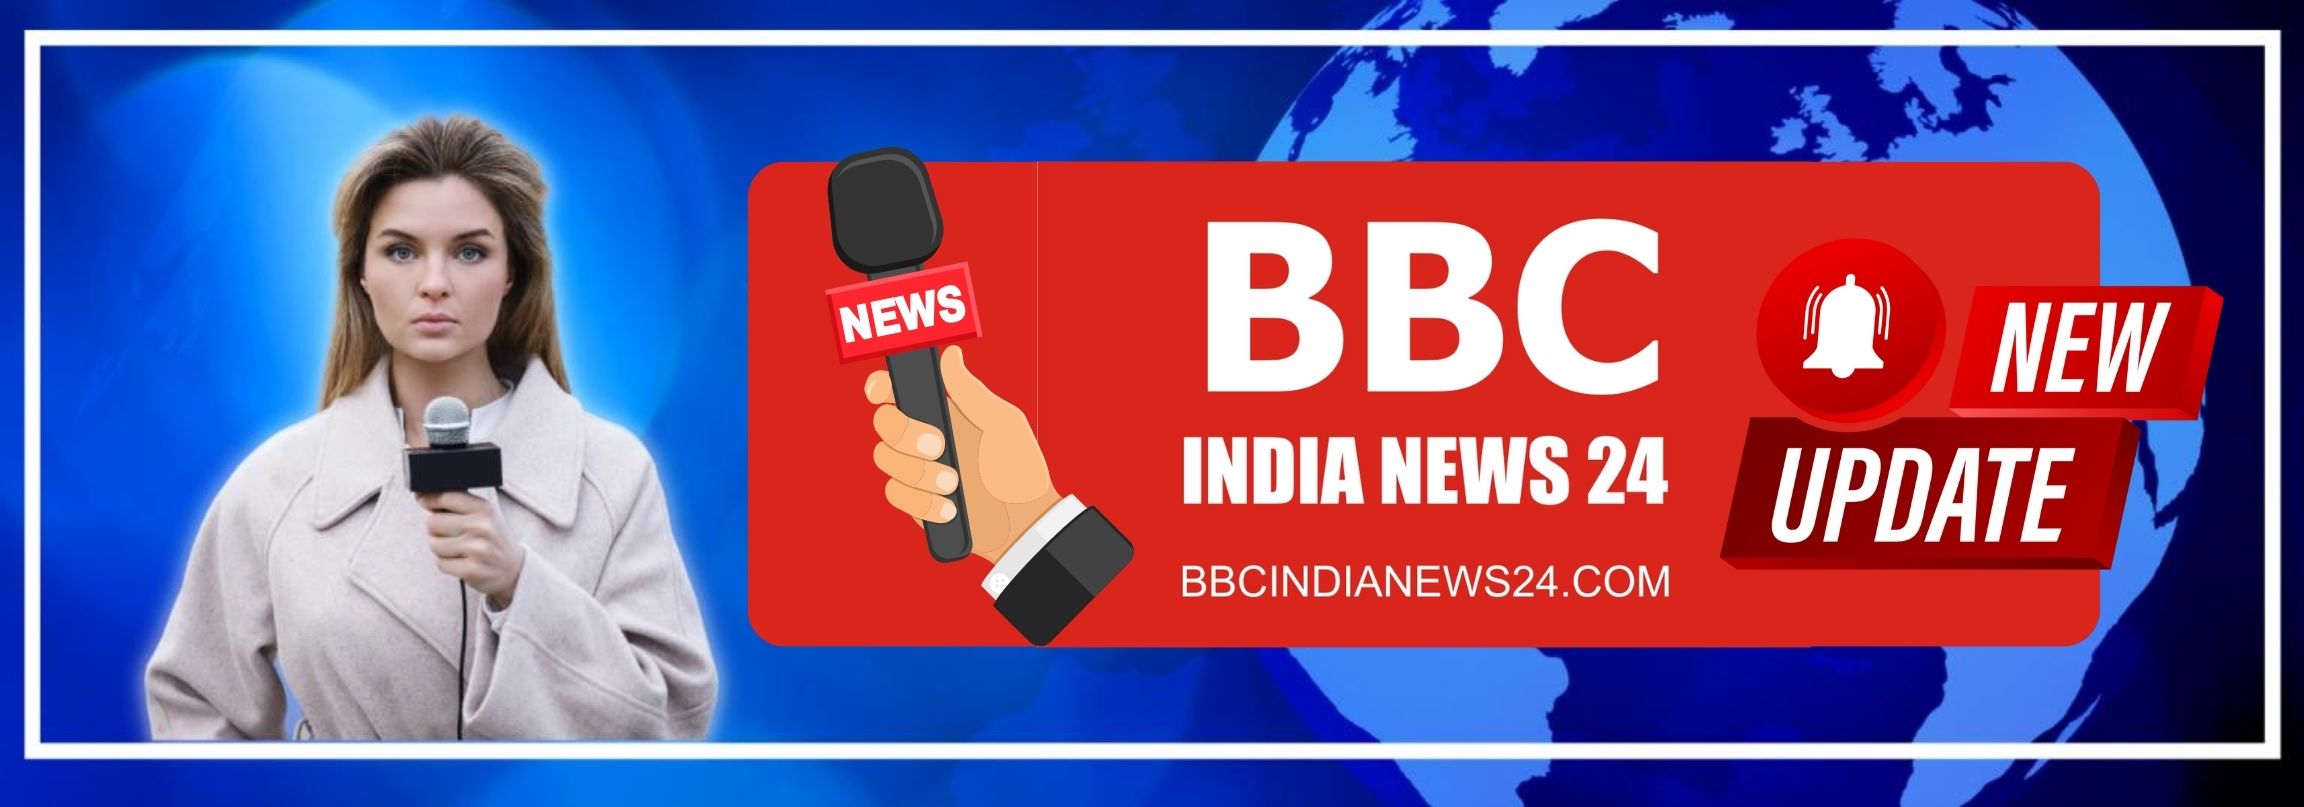 BBC INDIA NEWS24